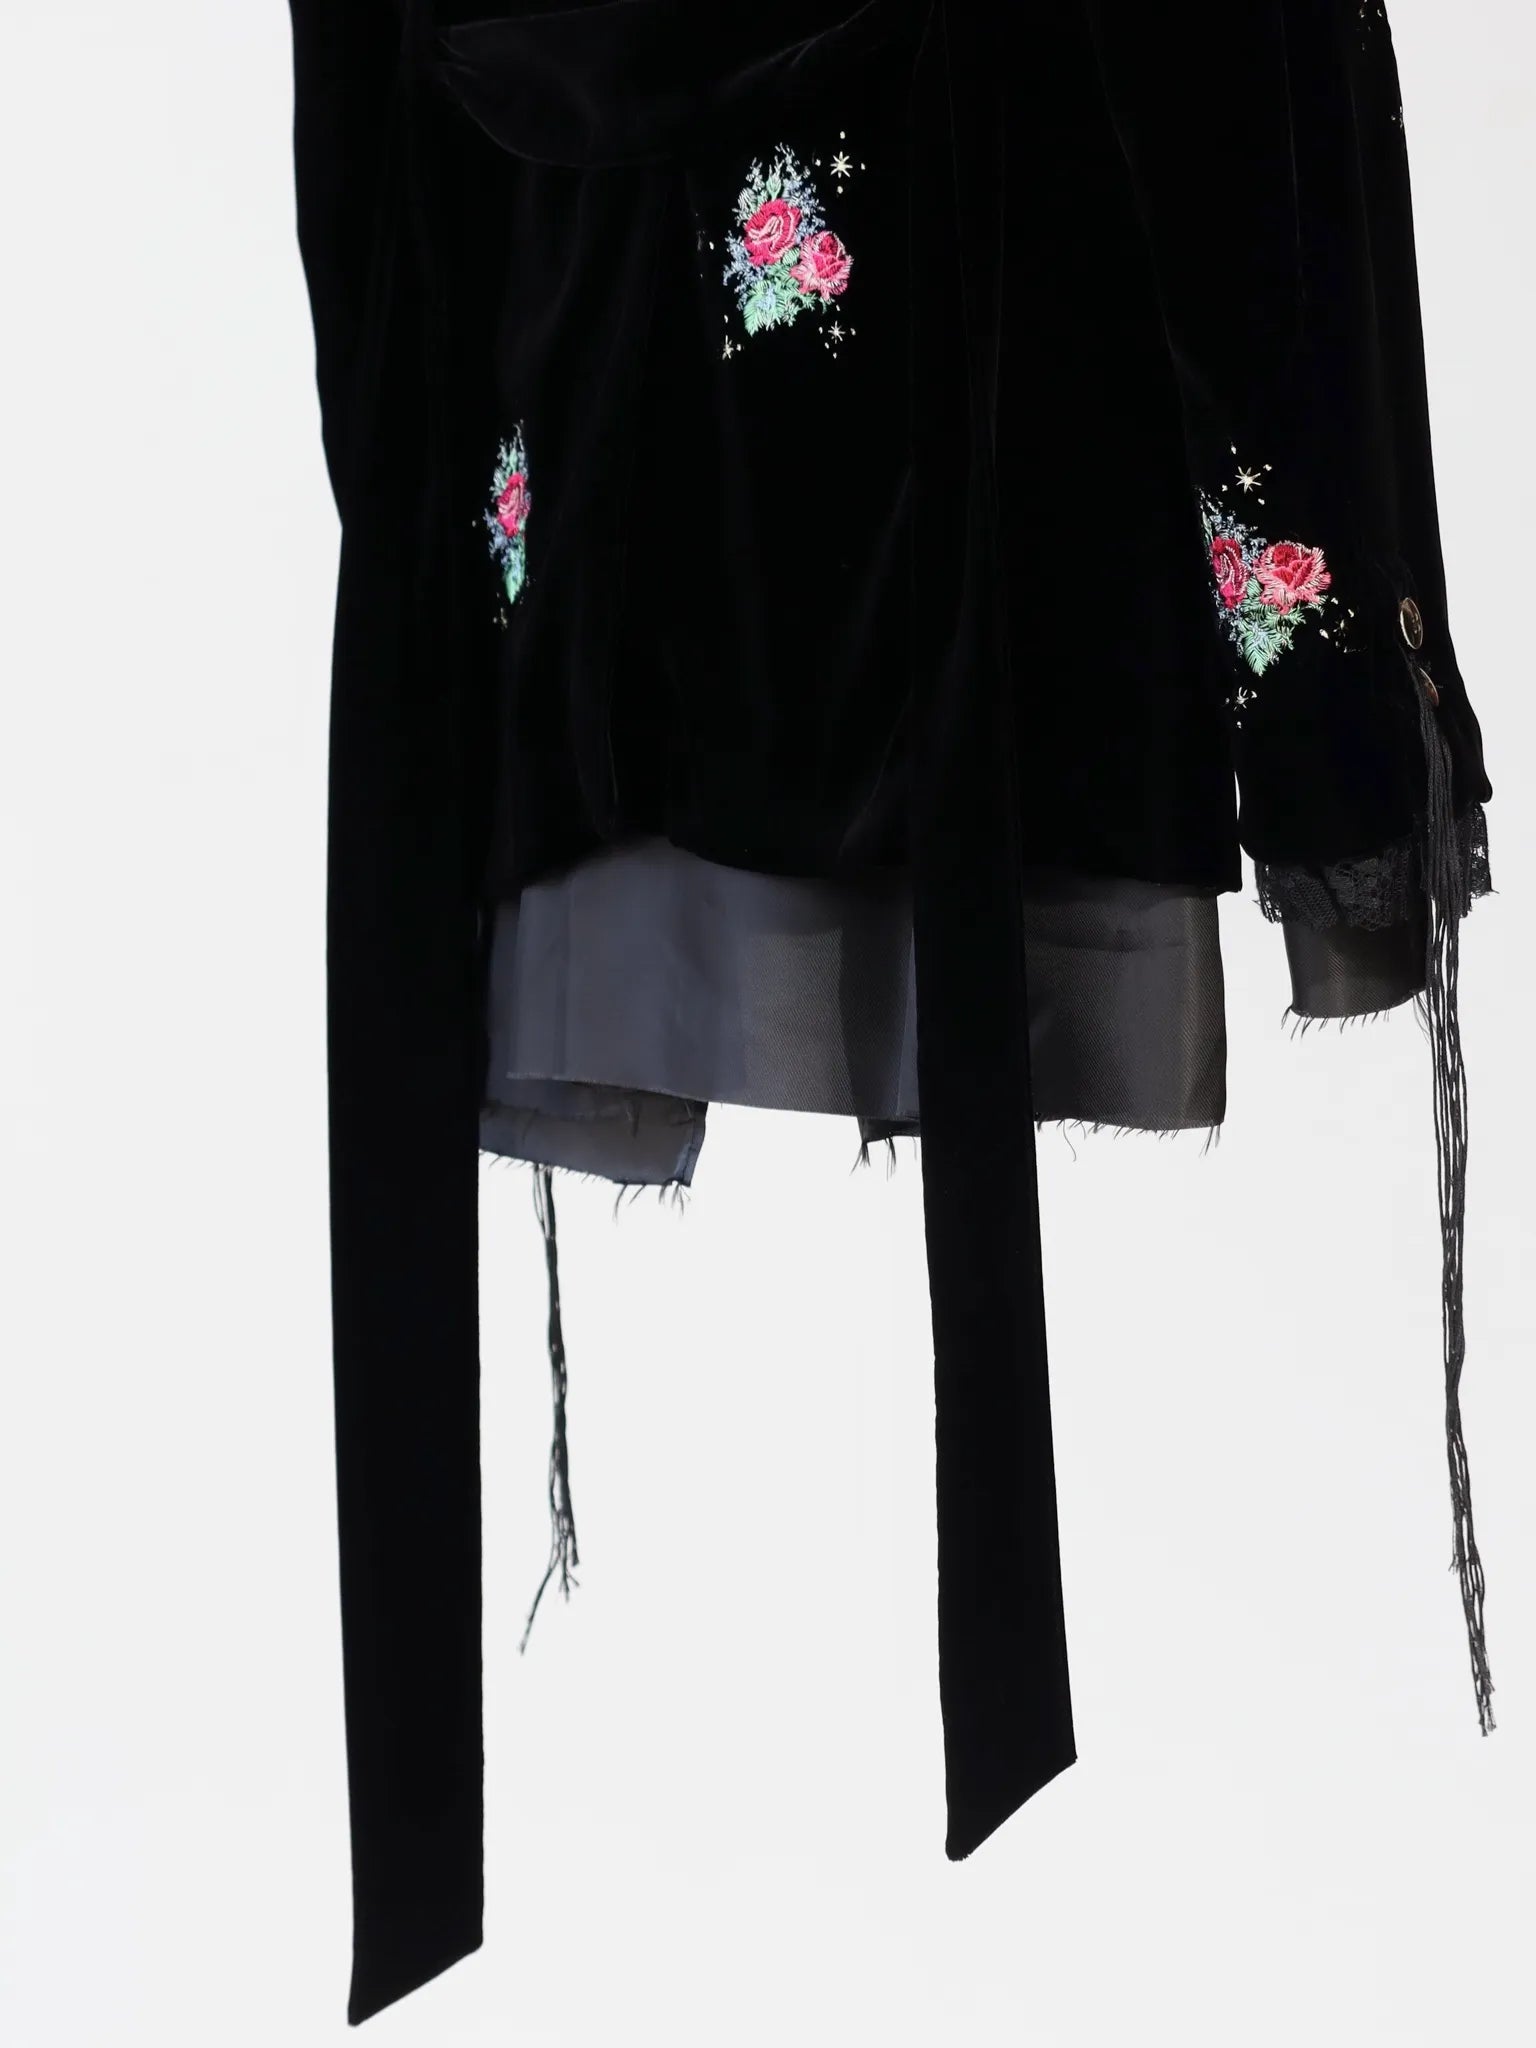 midorikawa-velvet-embroidery-jacket-black-embroidery-4